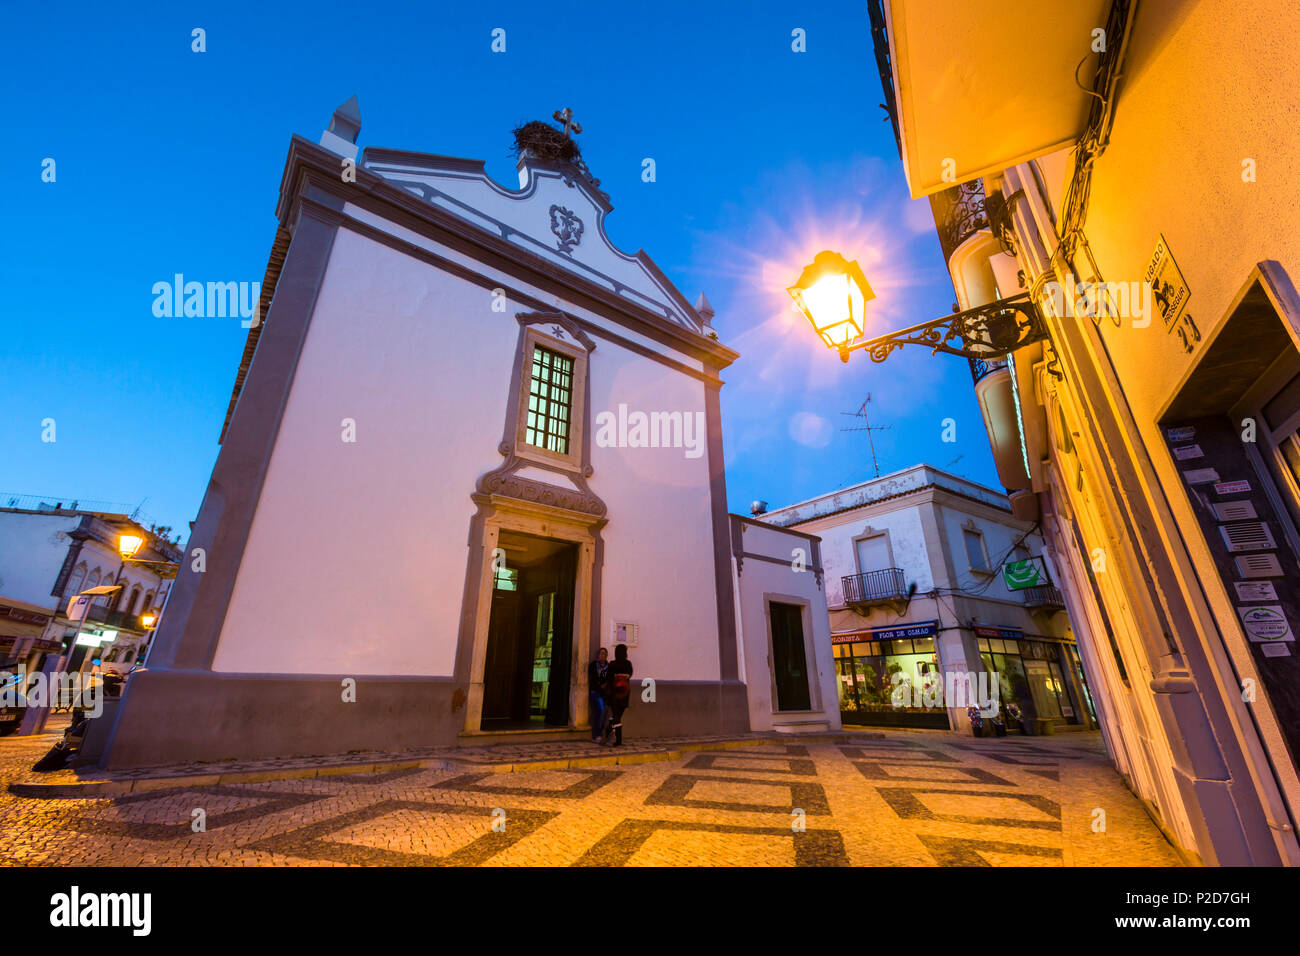 Church in the evening, Nossa Senhora da Soledade, Old town at dusk, Olhao, Algarve, Portugal Stock Photo